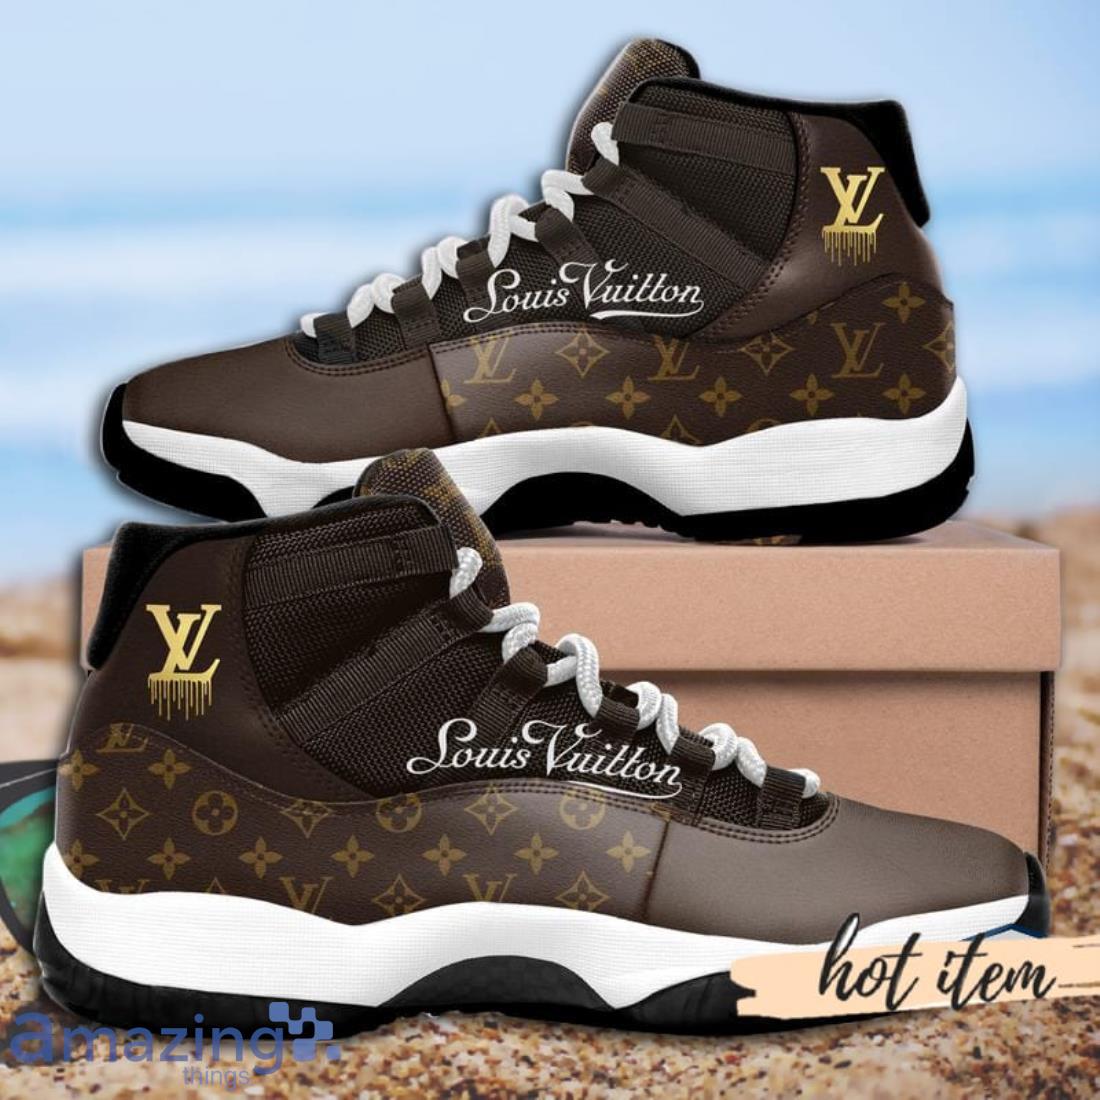 Louis Vuitton Retro Air Jordan 11 Shoes